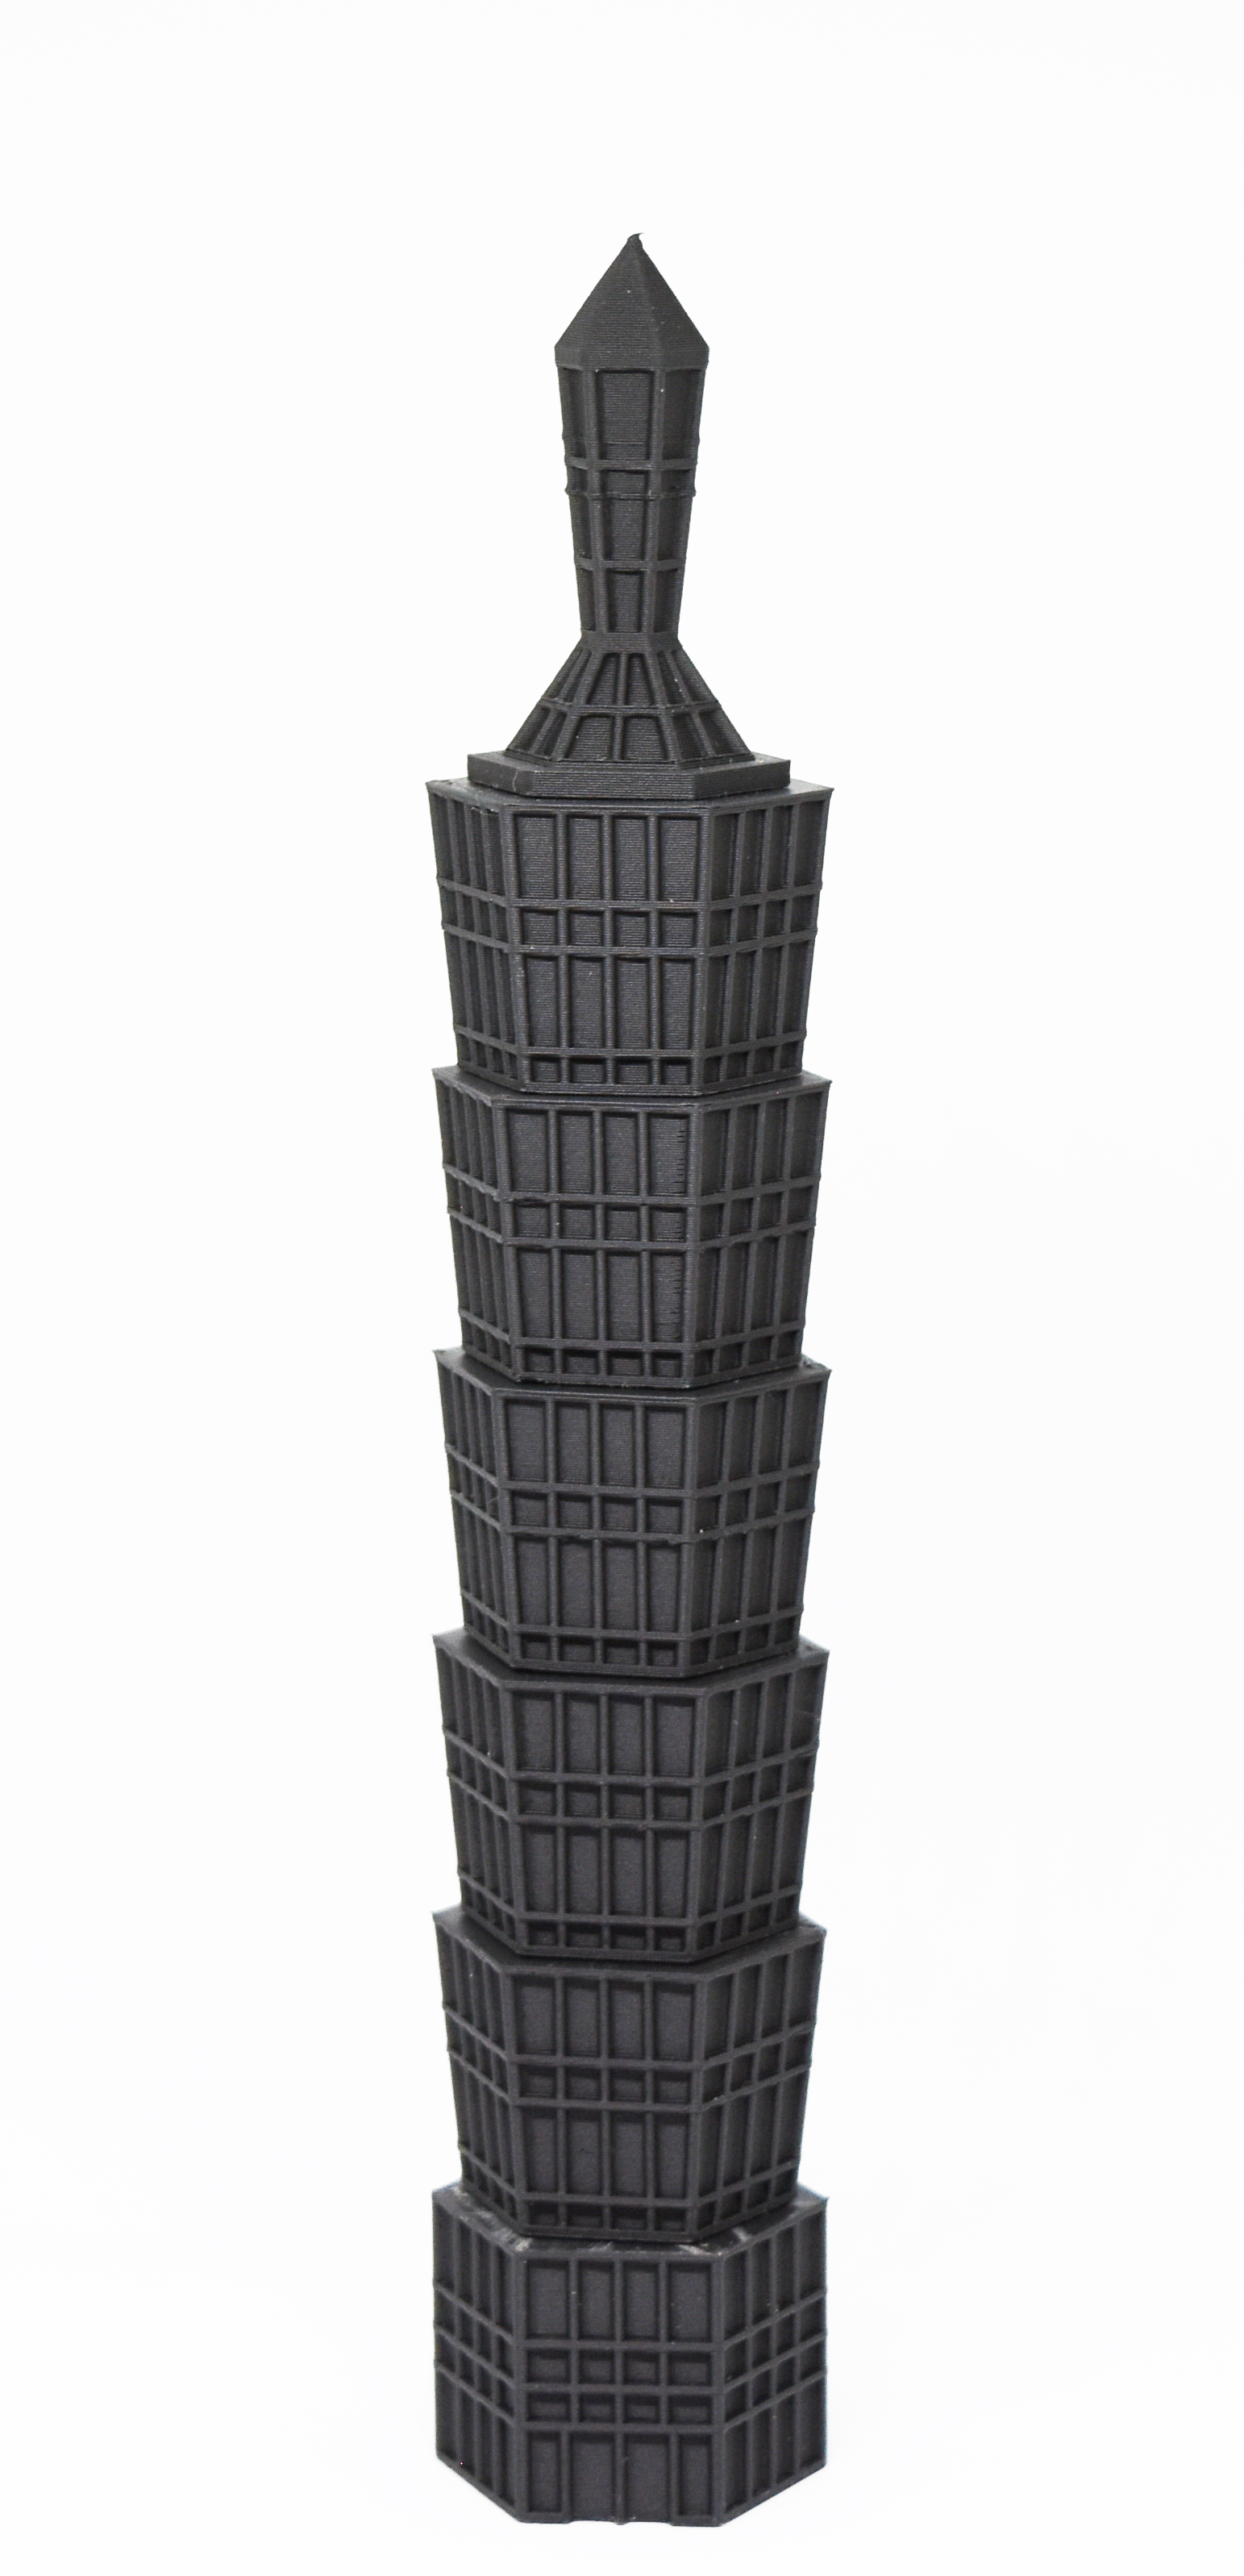 6mm scale Skyscraper - Taffy Tower - BattleTech Compatible